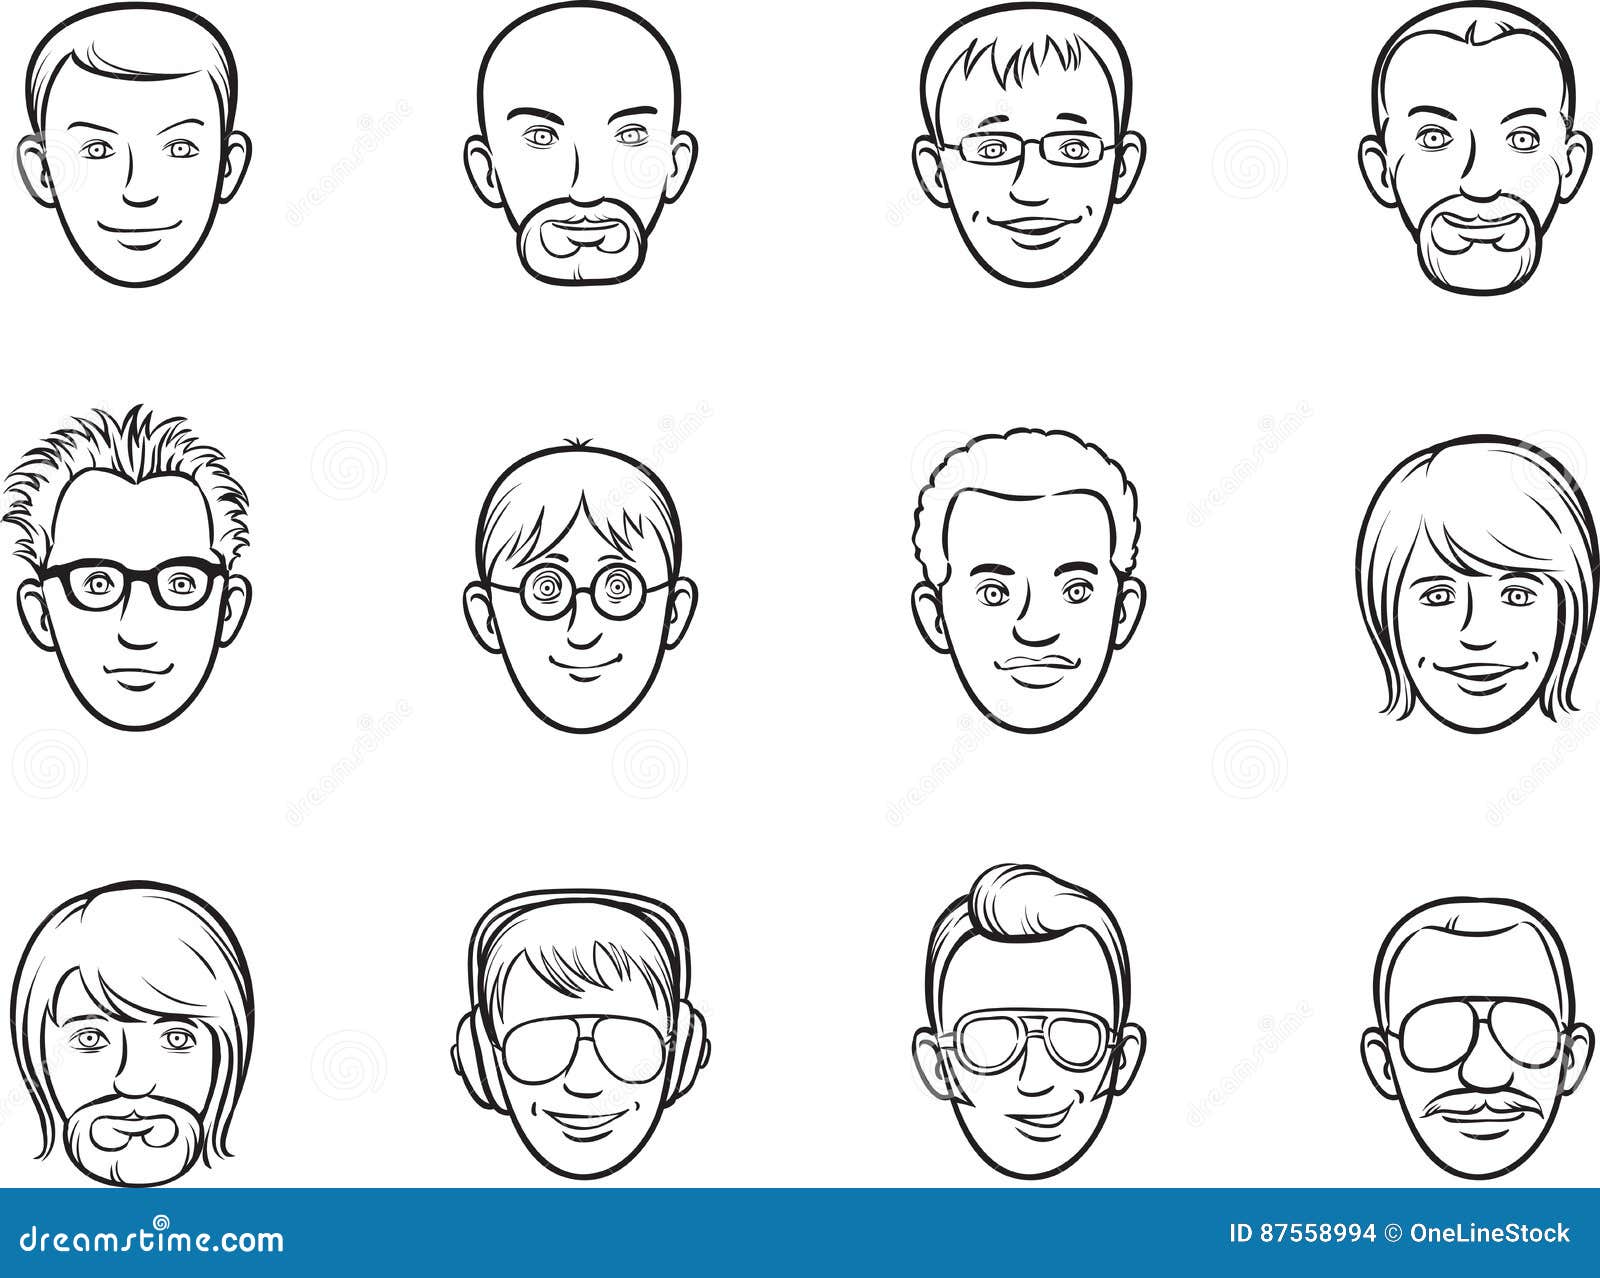 Whiteboard Drawing - Cartoon Avatar Men Faces Stock Vector - Illustration  of bearded, american: 87558994